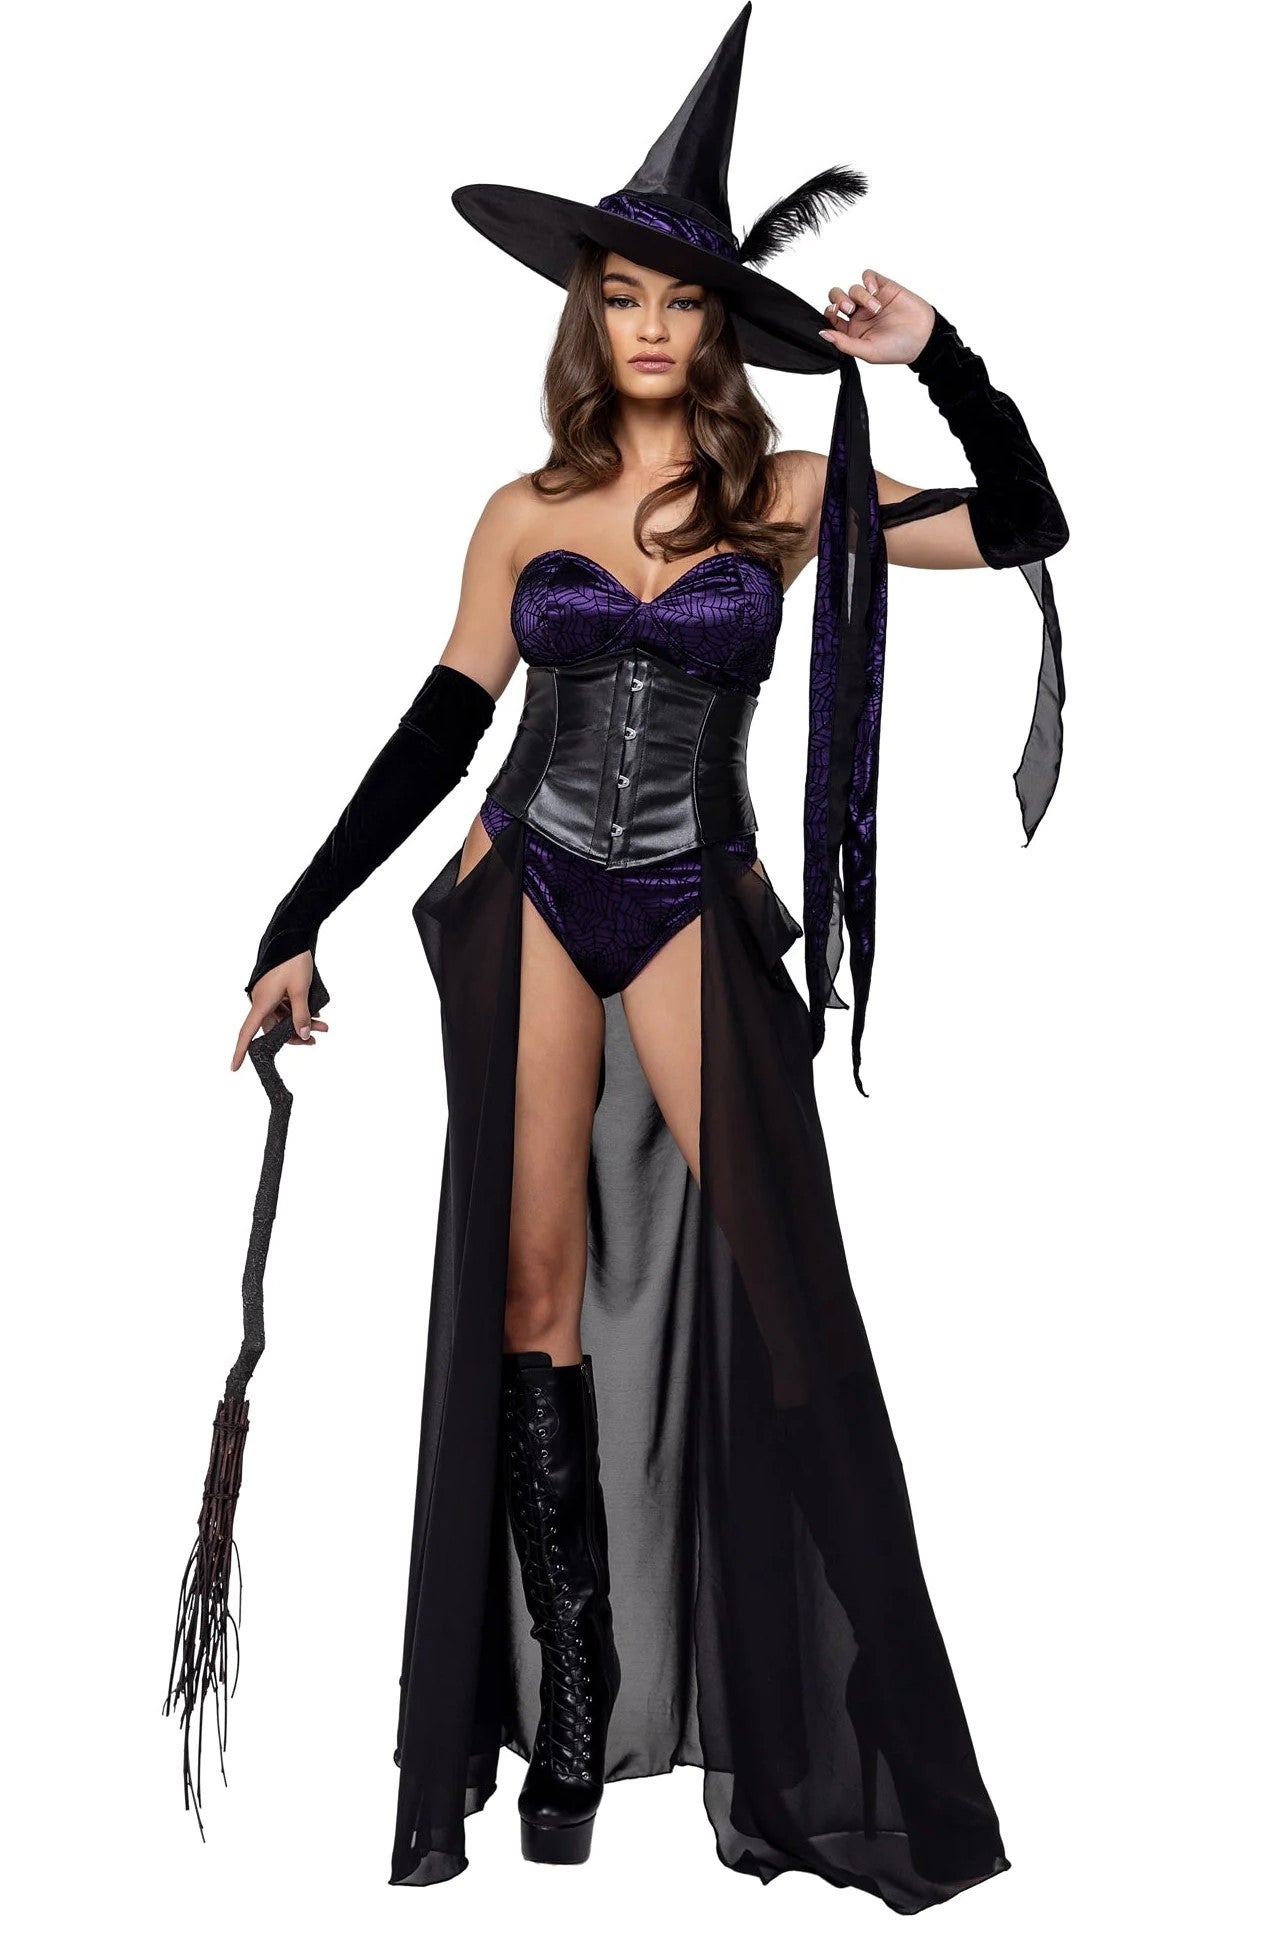 Dark Spell Seductress costume